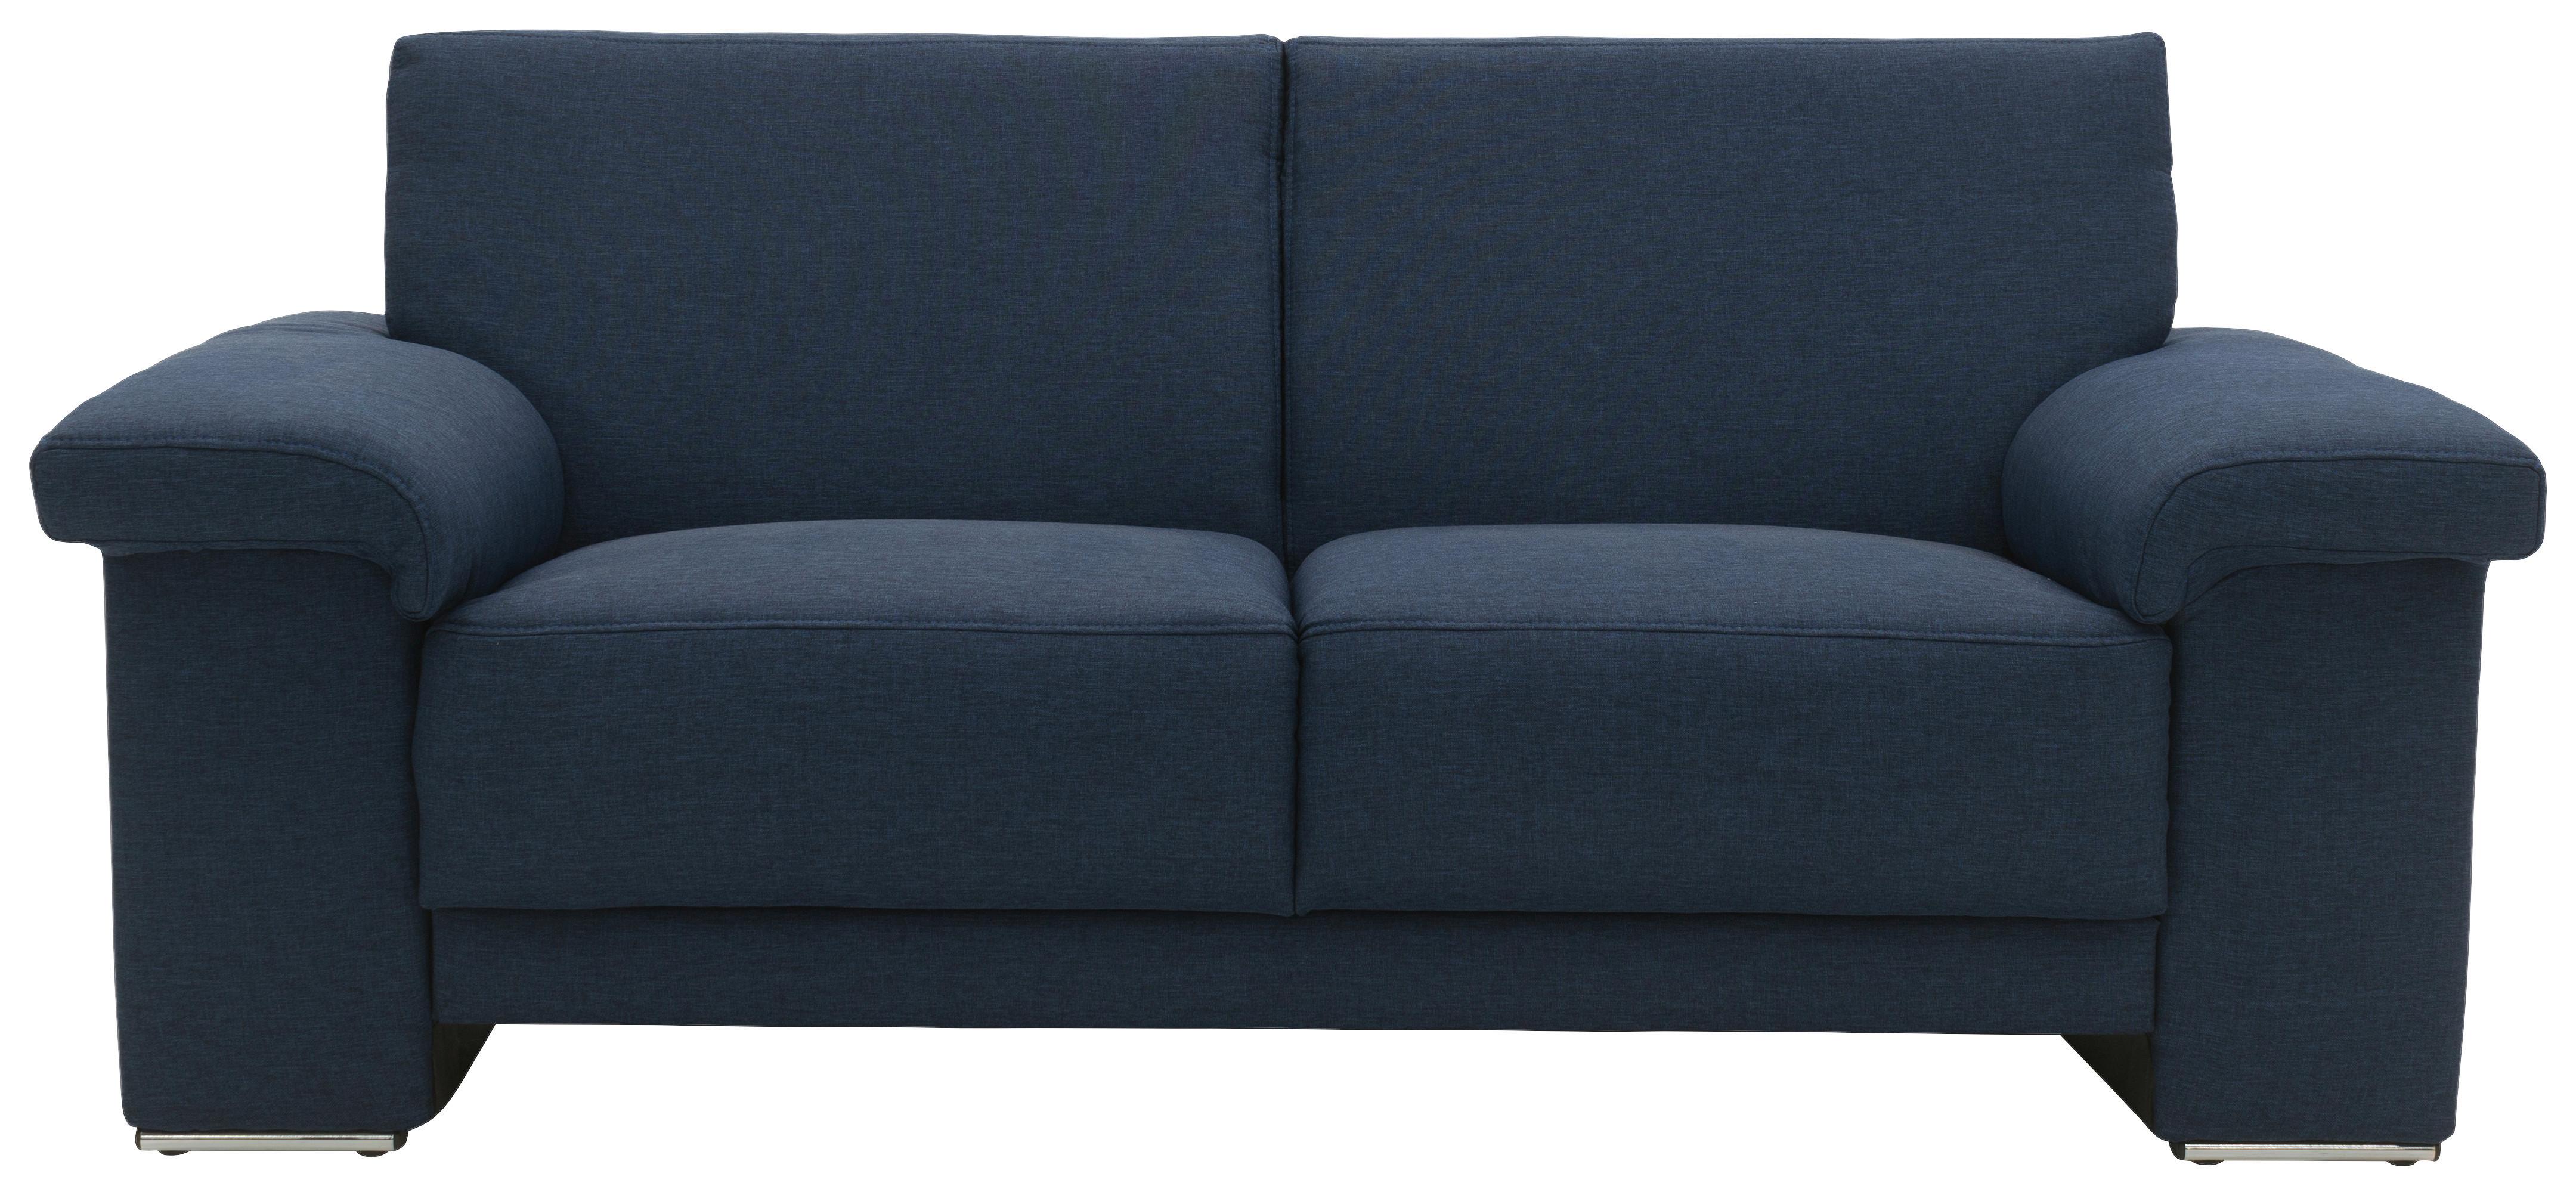 2-Sitzer-Sofa Arizona Dunkelblau - Chromfarben/Dunkelblau, KONVENTIONELL, Textil (185/84/91cm) - MID.YOU